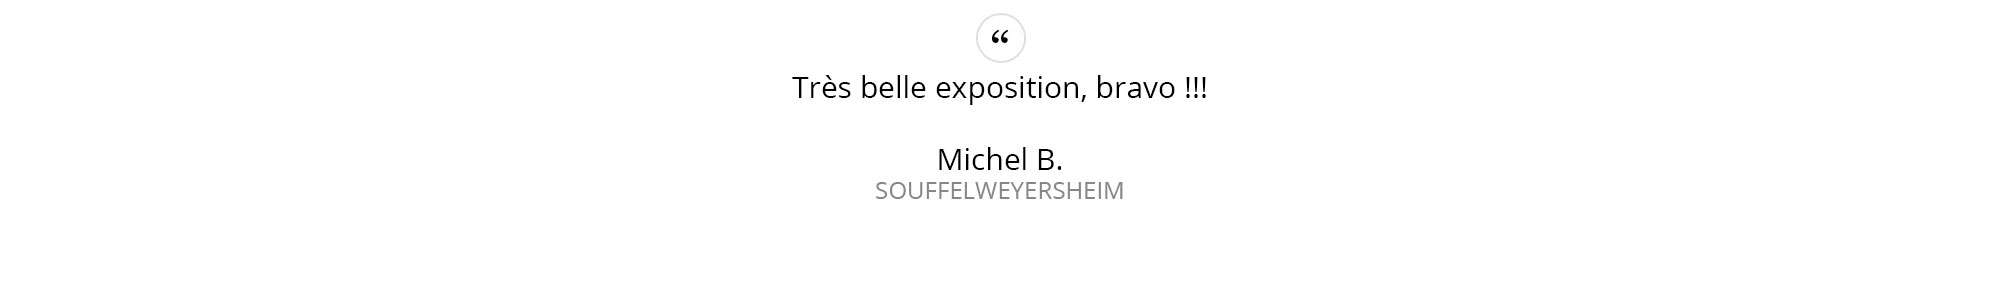 Michel-B.---SOUFFELWEYERSHEIM